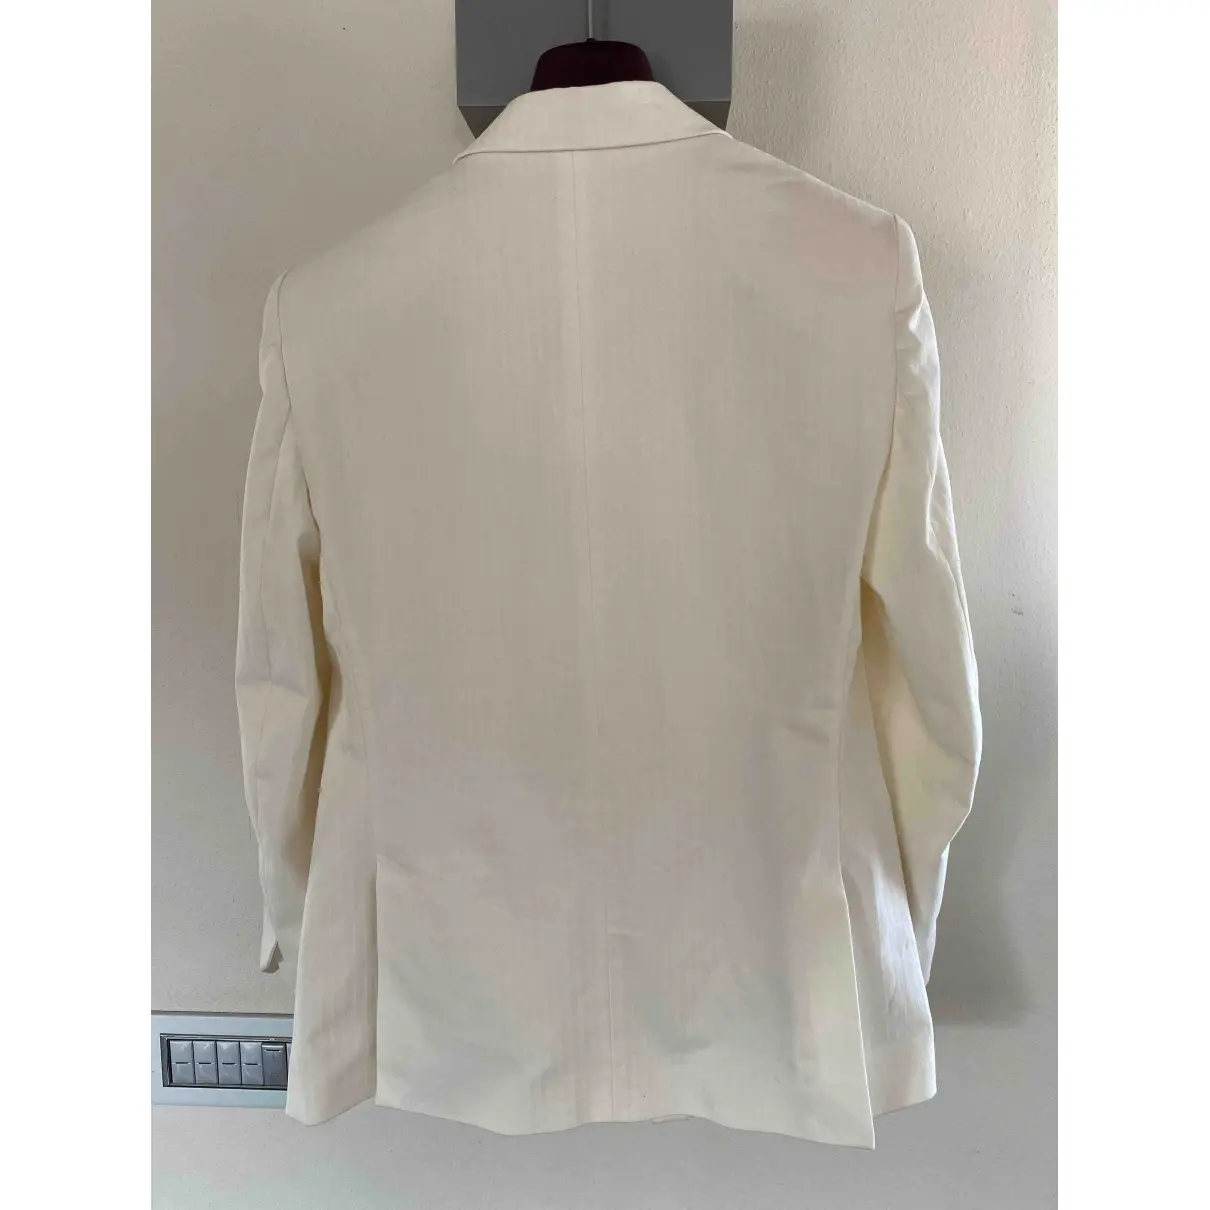 Buy Zadig & Voltaire White Cotton Jacket Spring Summer 2019 online